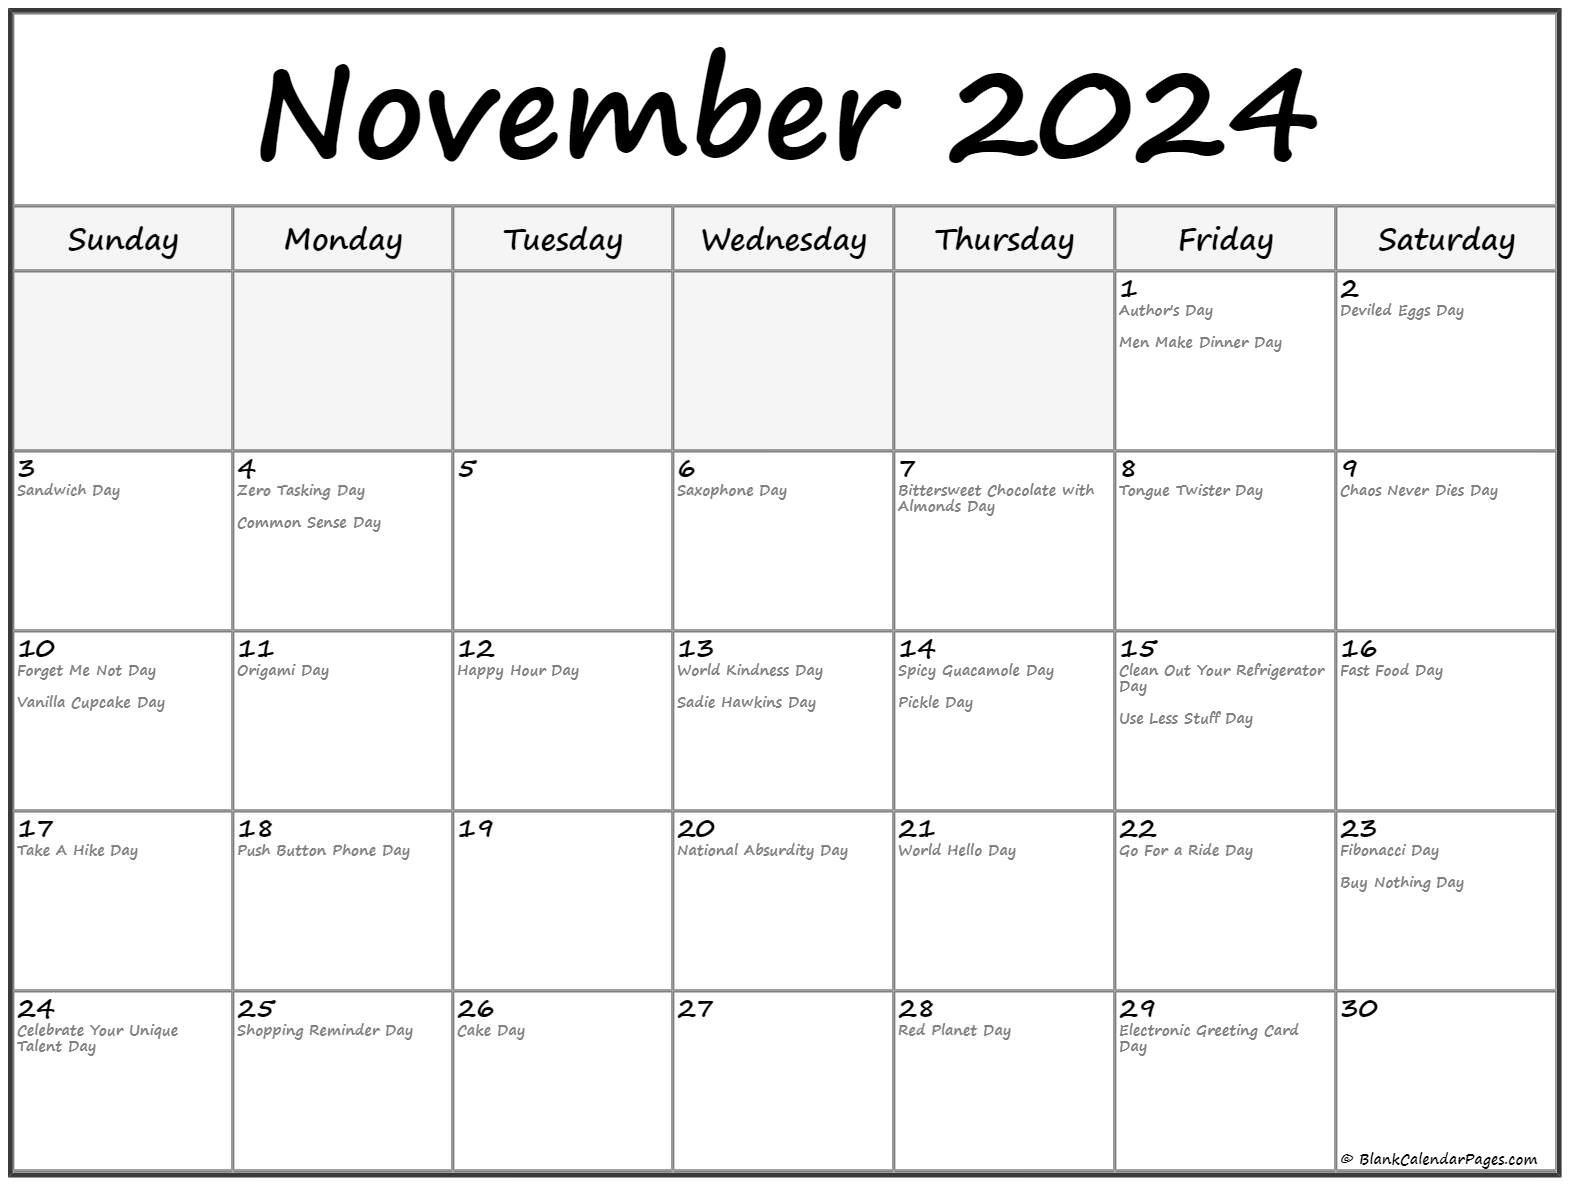 november-2021-calendar-printable-with-holidays-calendar-2021-images